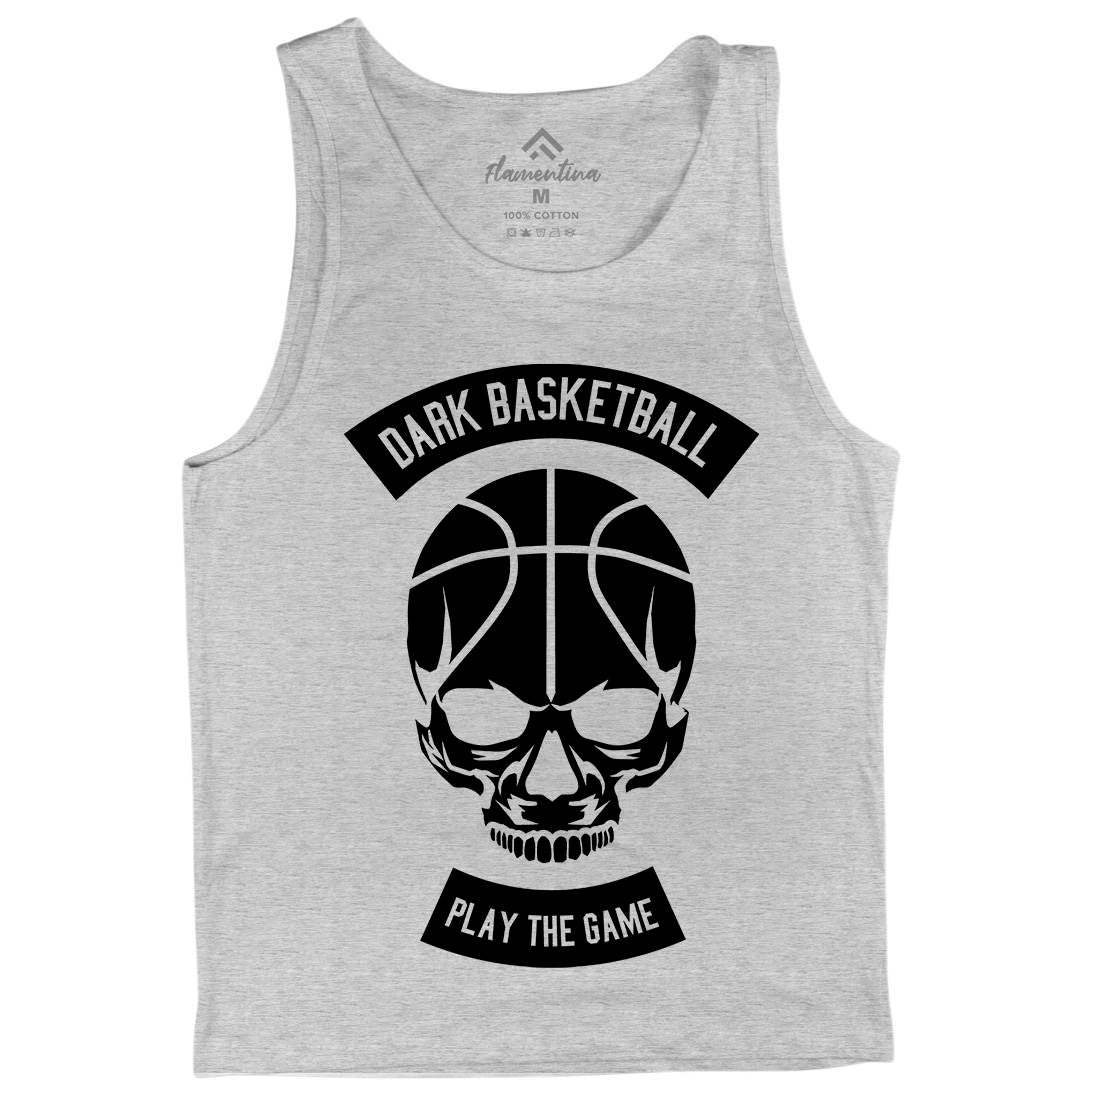 Dark Basketball Mens Tank Top Vest Sport B525